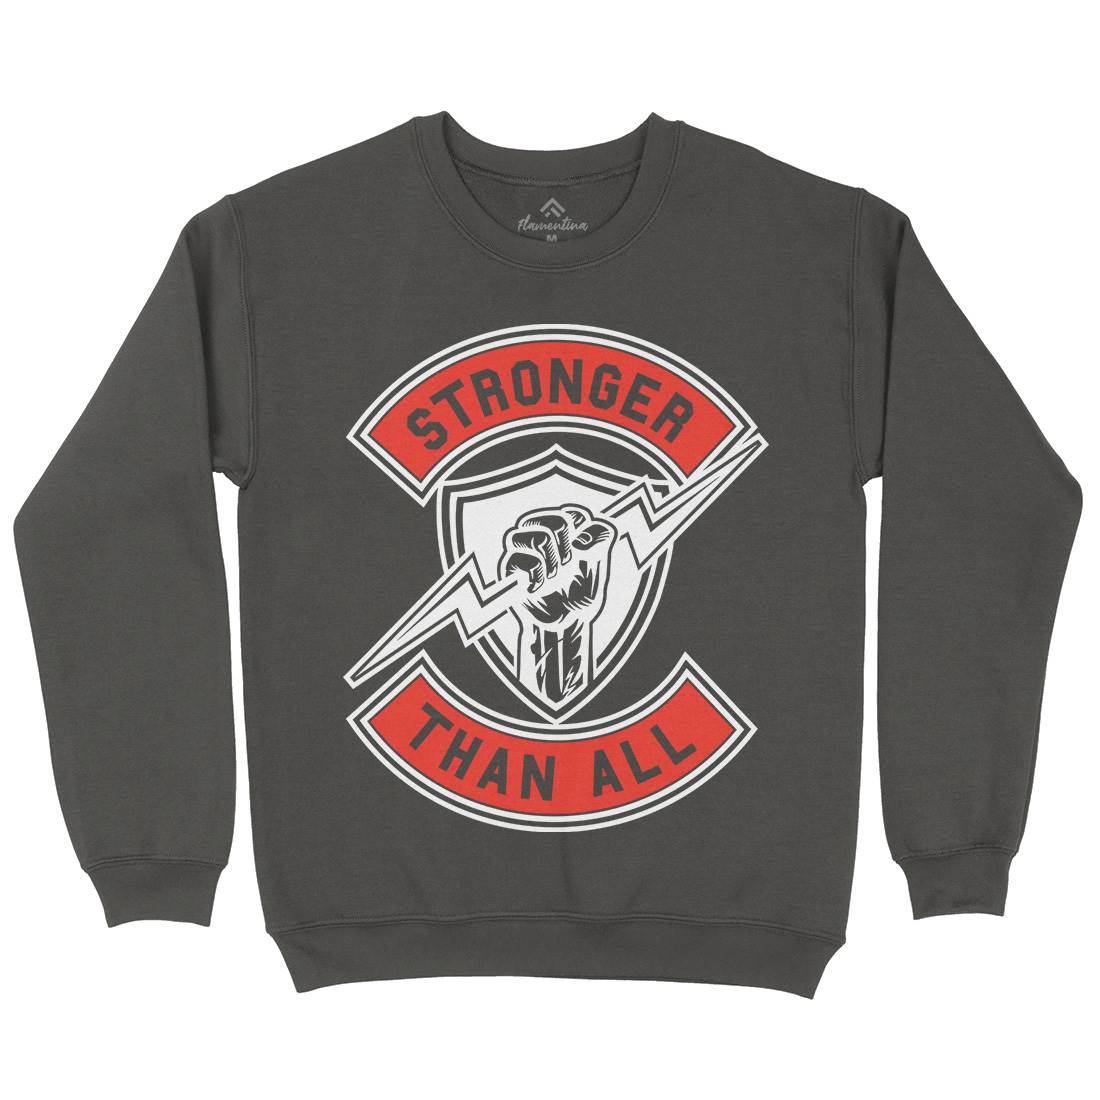 Stronger Than All Mens Crew Neck Sweatshirt Gym A290